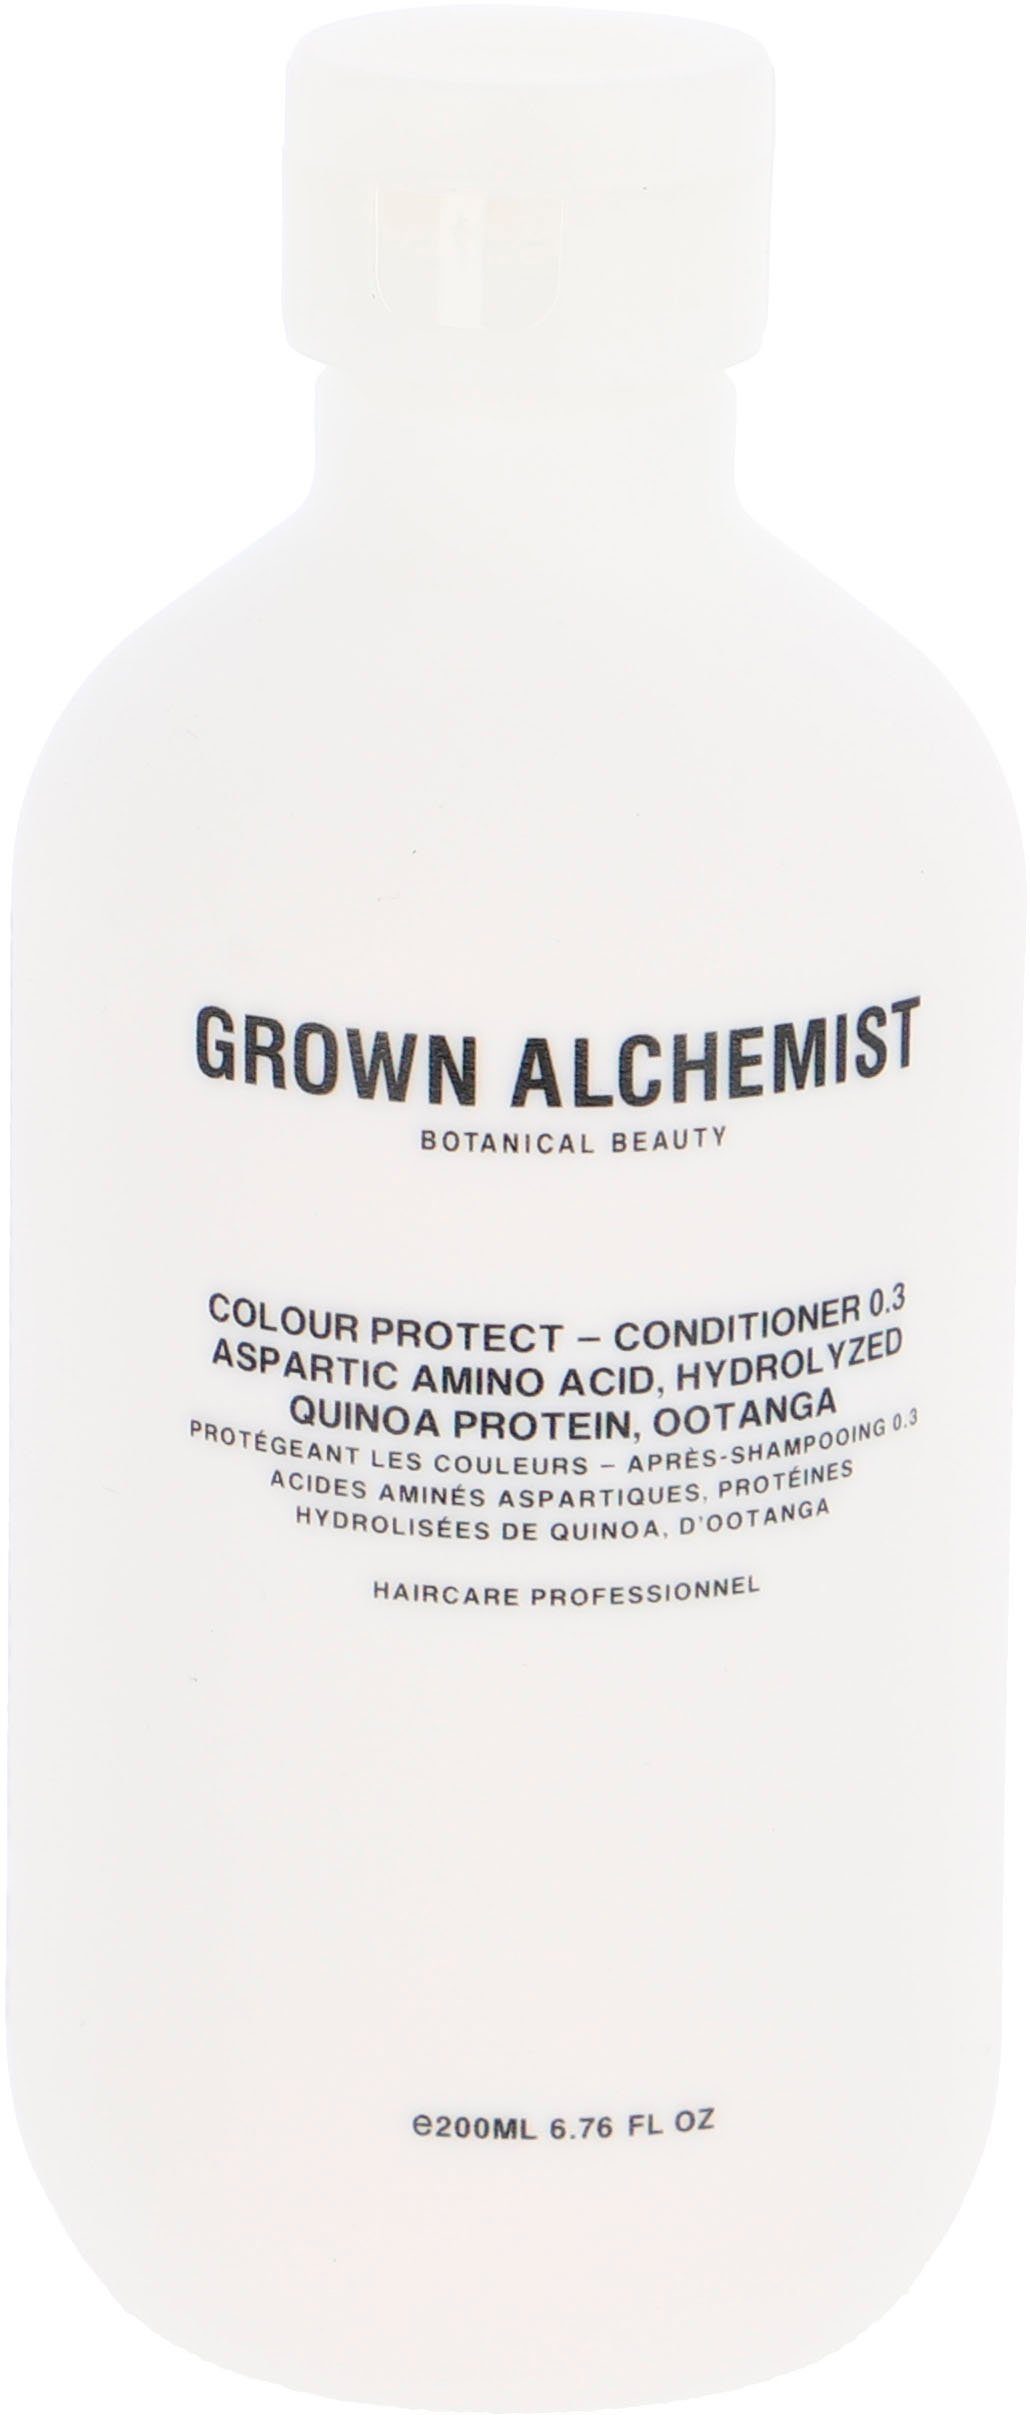 Markteinführung GROWN ALCHEMIST Haarspülung Colour Amino Aspartic Protect 0.3, Protein, Hydrolyzed Ootanga - Conditioner Acid, Quinoa